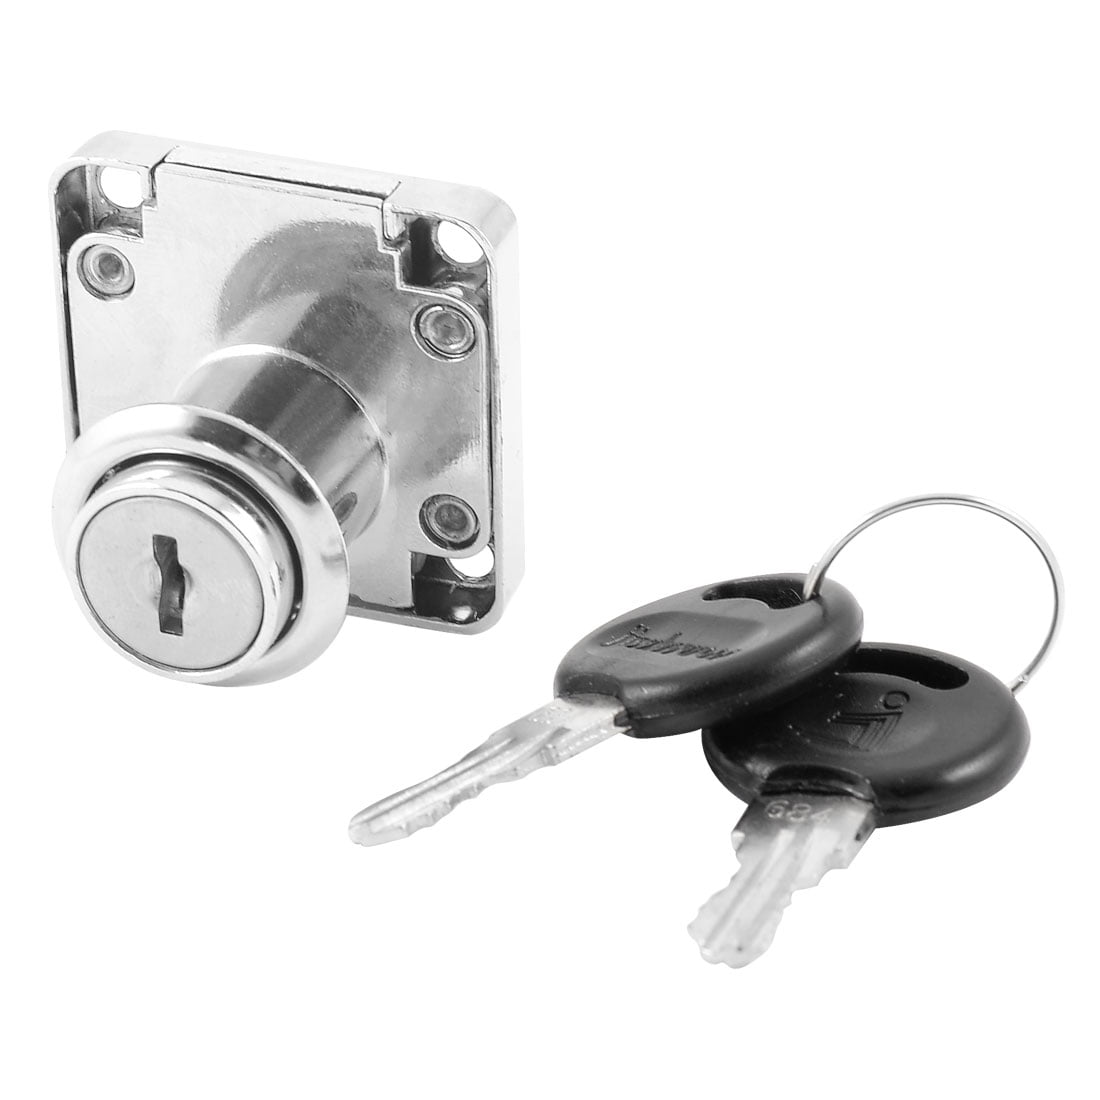 1 Set Lock for Drawer Desk Furniture Cabinet Wardrobe Showcase Locker Metal 2 Keys with Screw 19mm Head